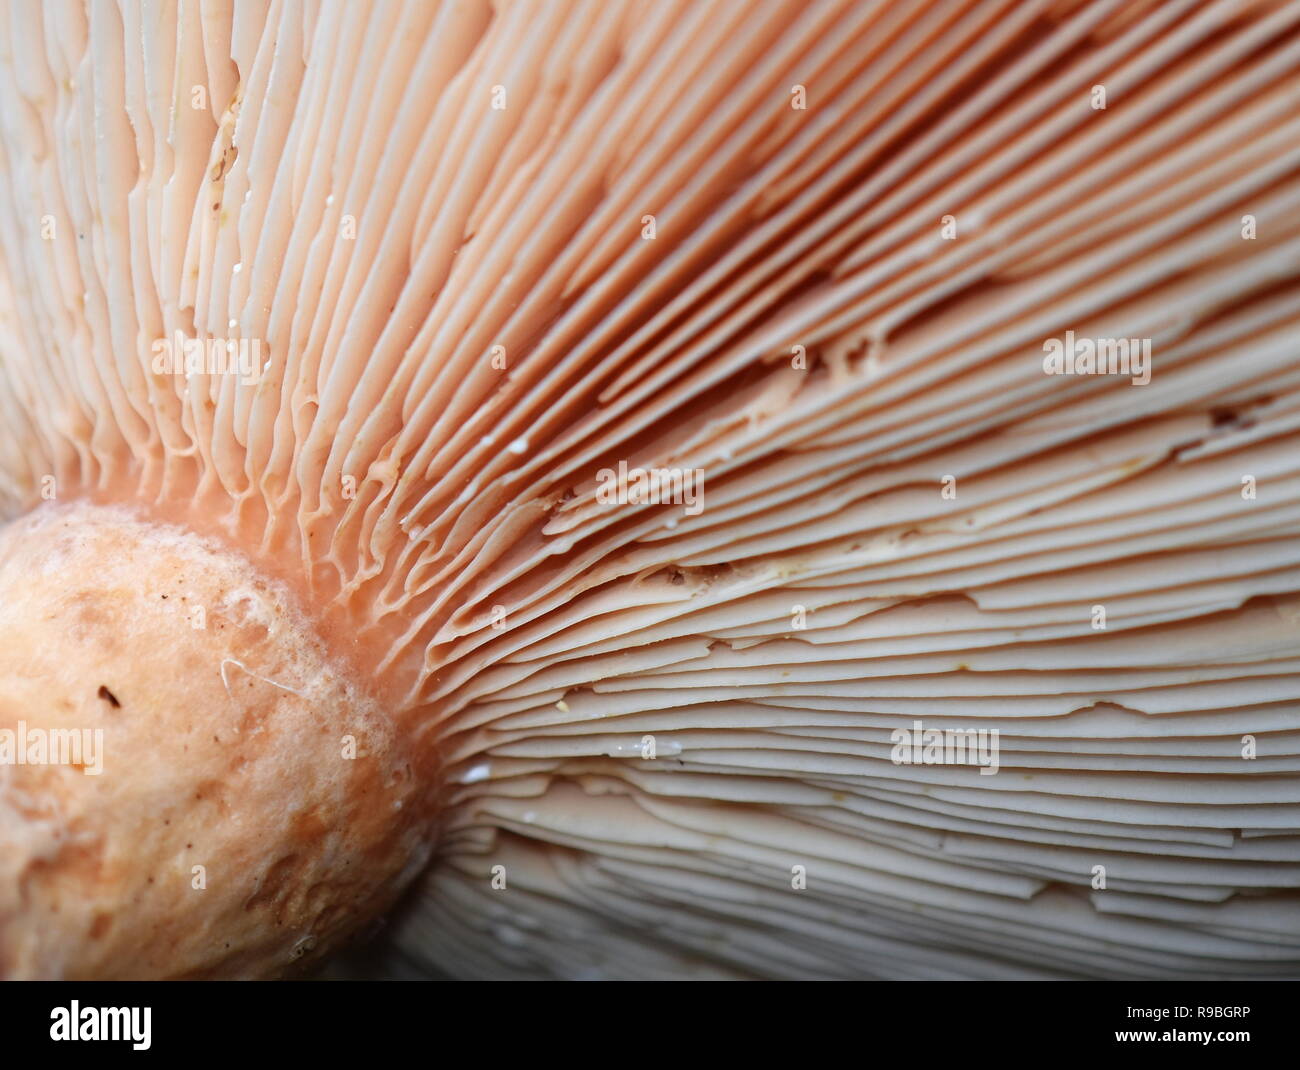 Closeup on gills underneath the cap of a lactarius mushroom Stock Photo